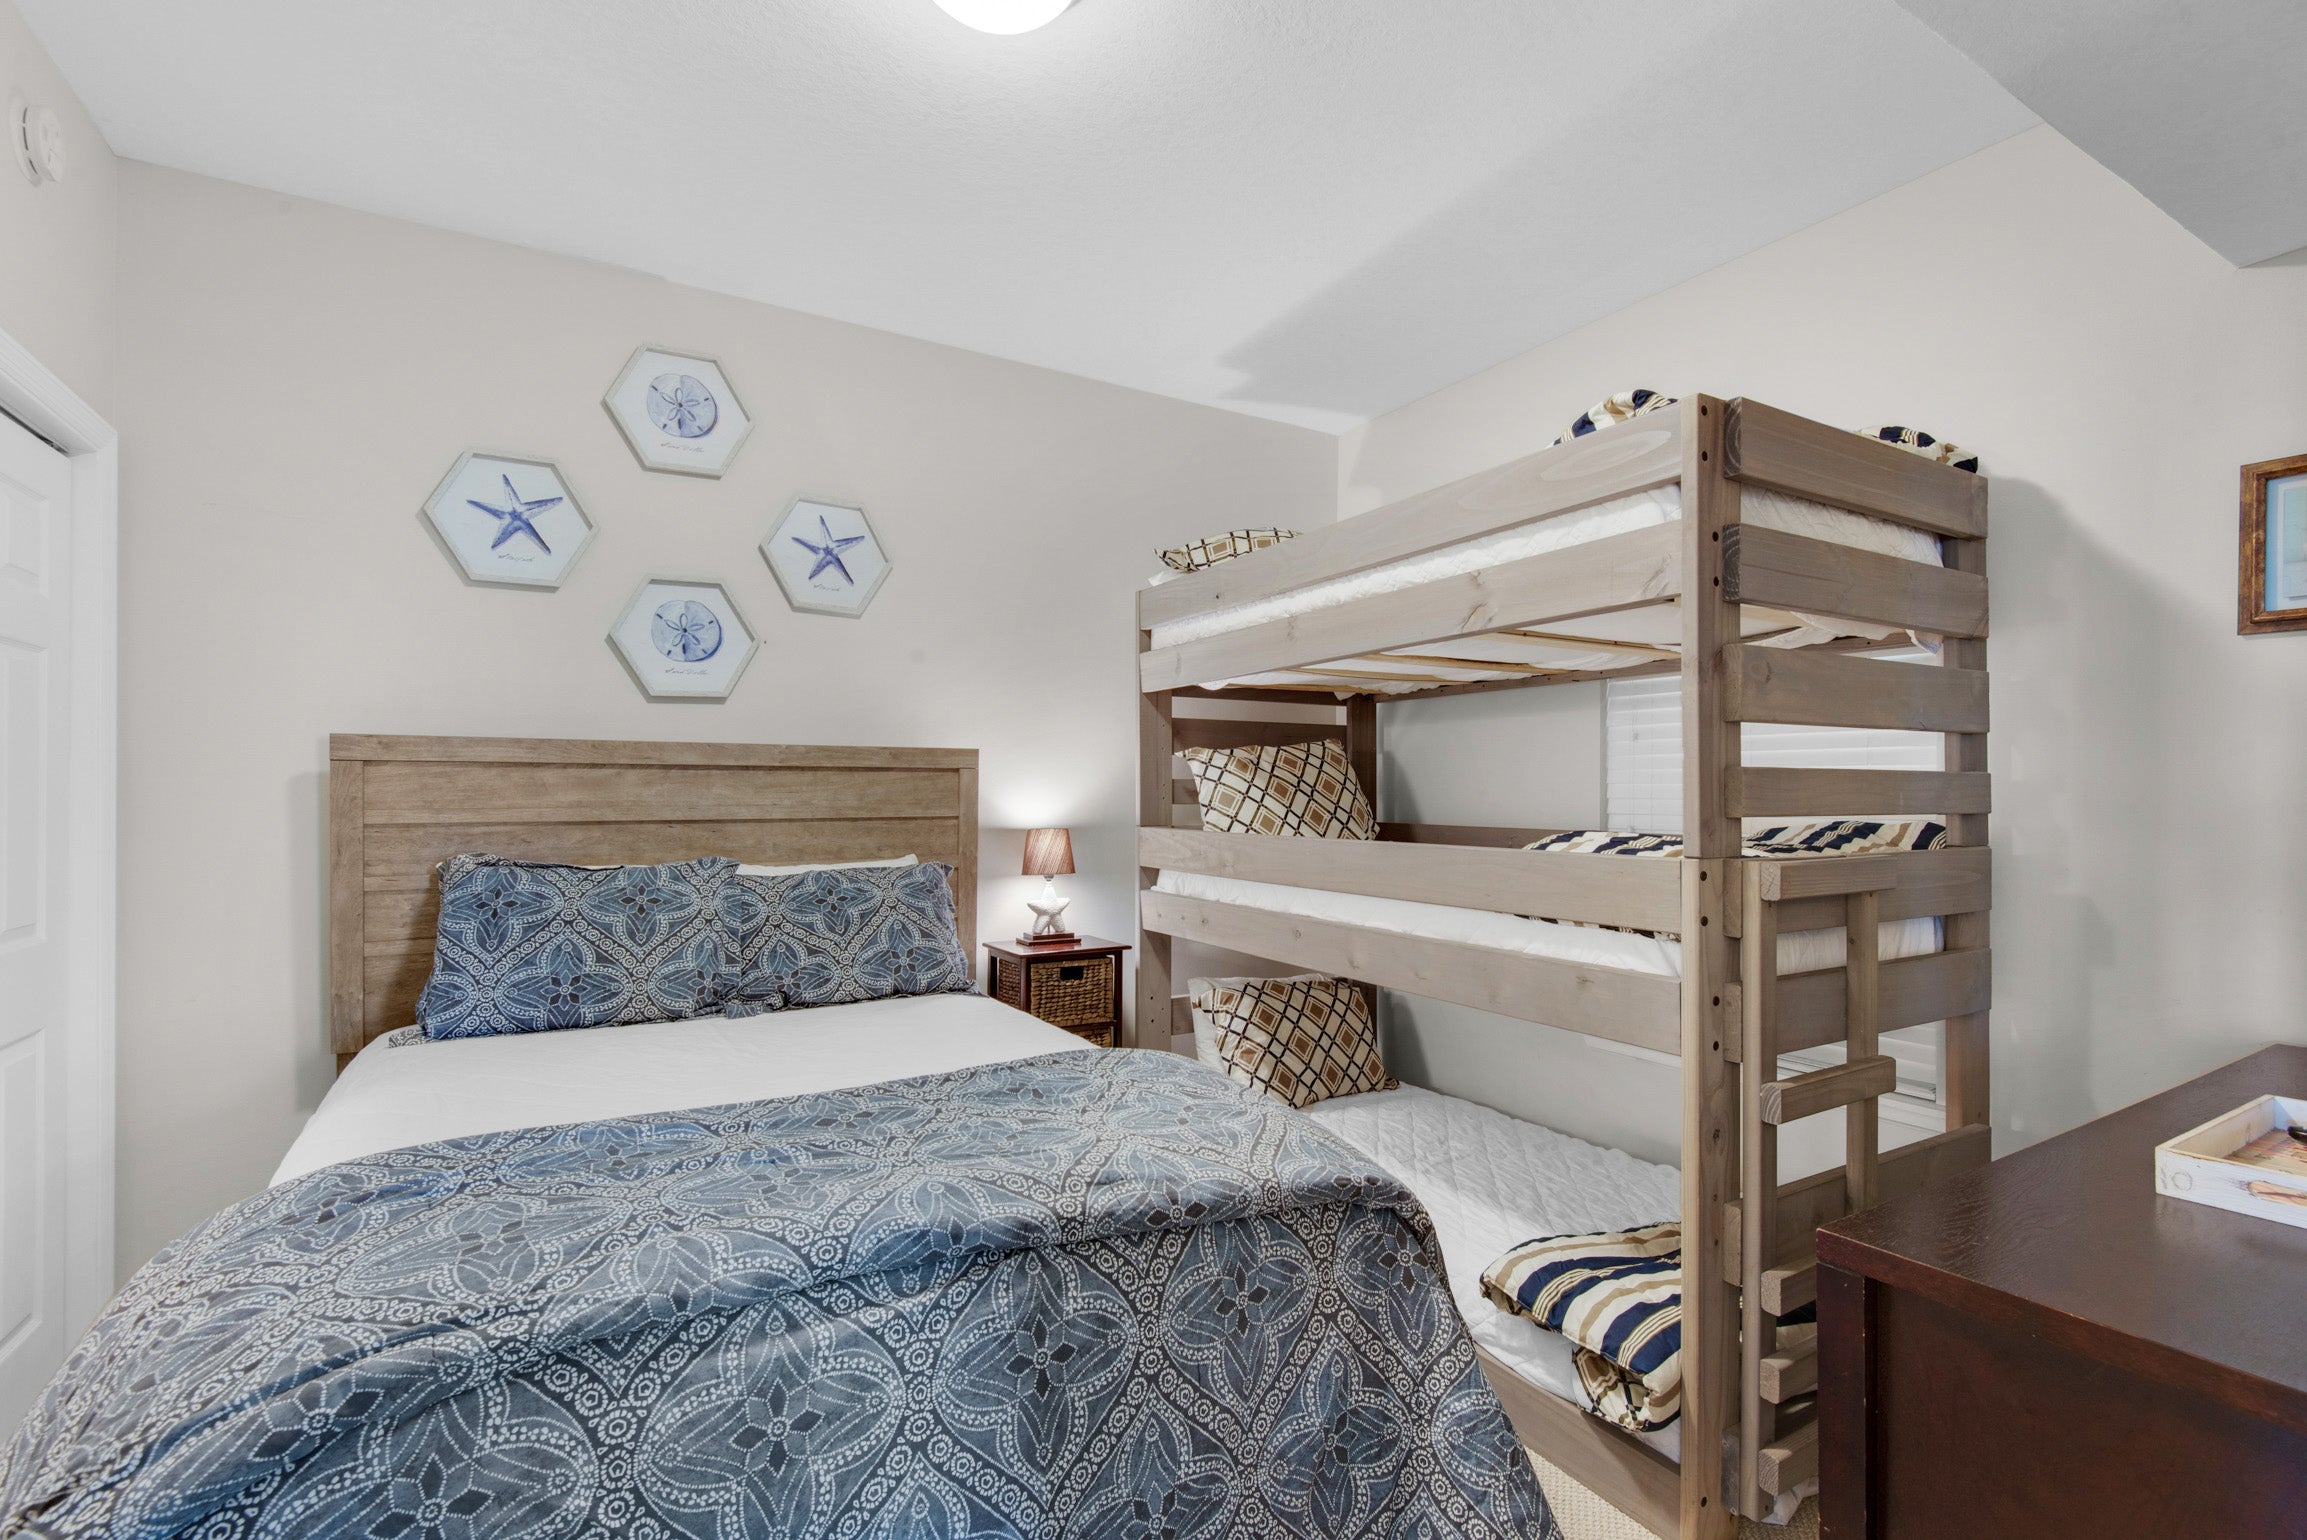 Guest room includes 3 tier bunk bed